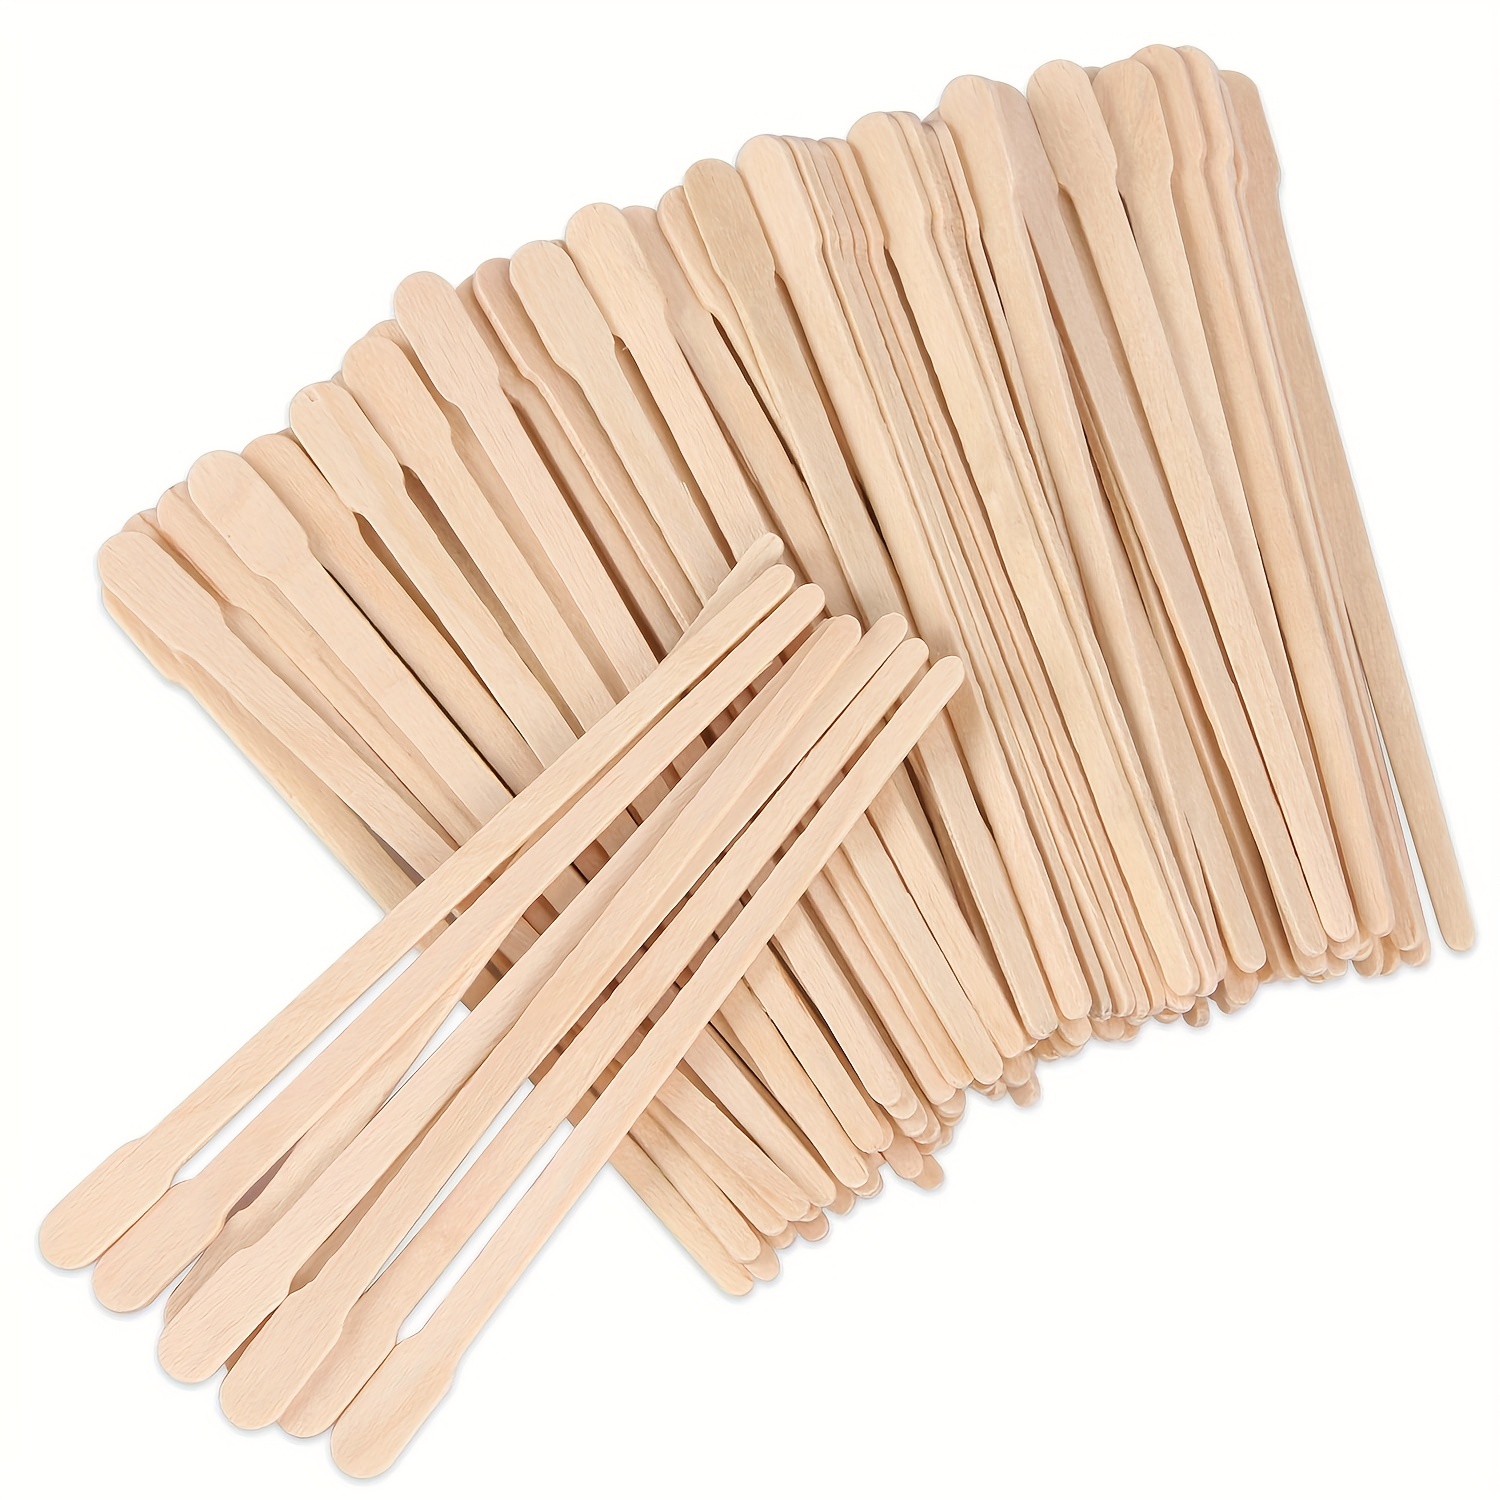  200 PCS Natural Bamboo Sticks Wooden Sticks for Crafts